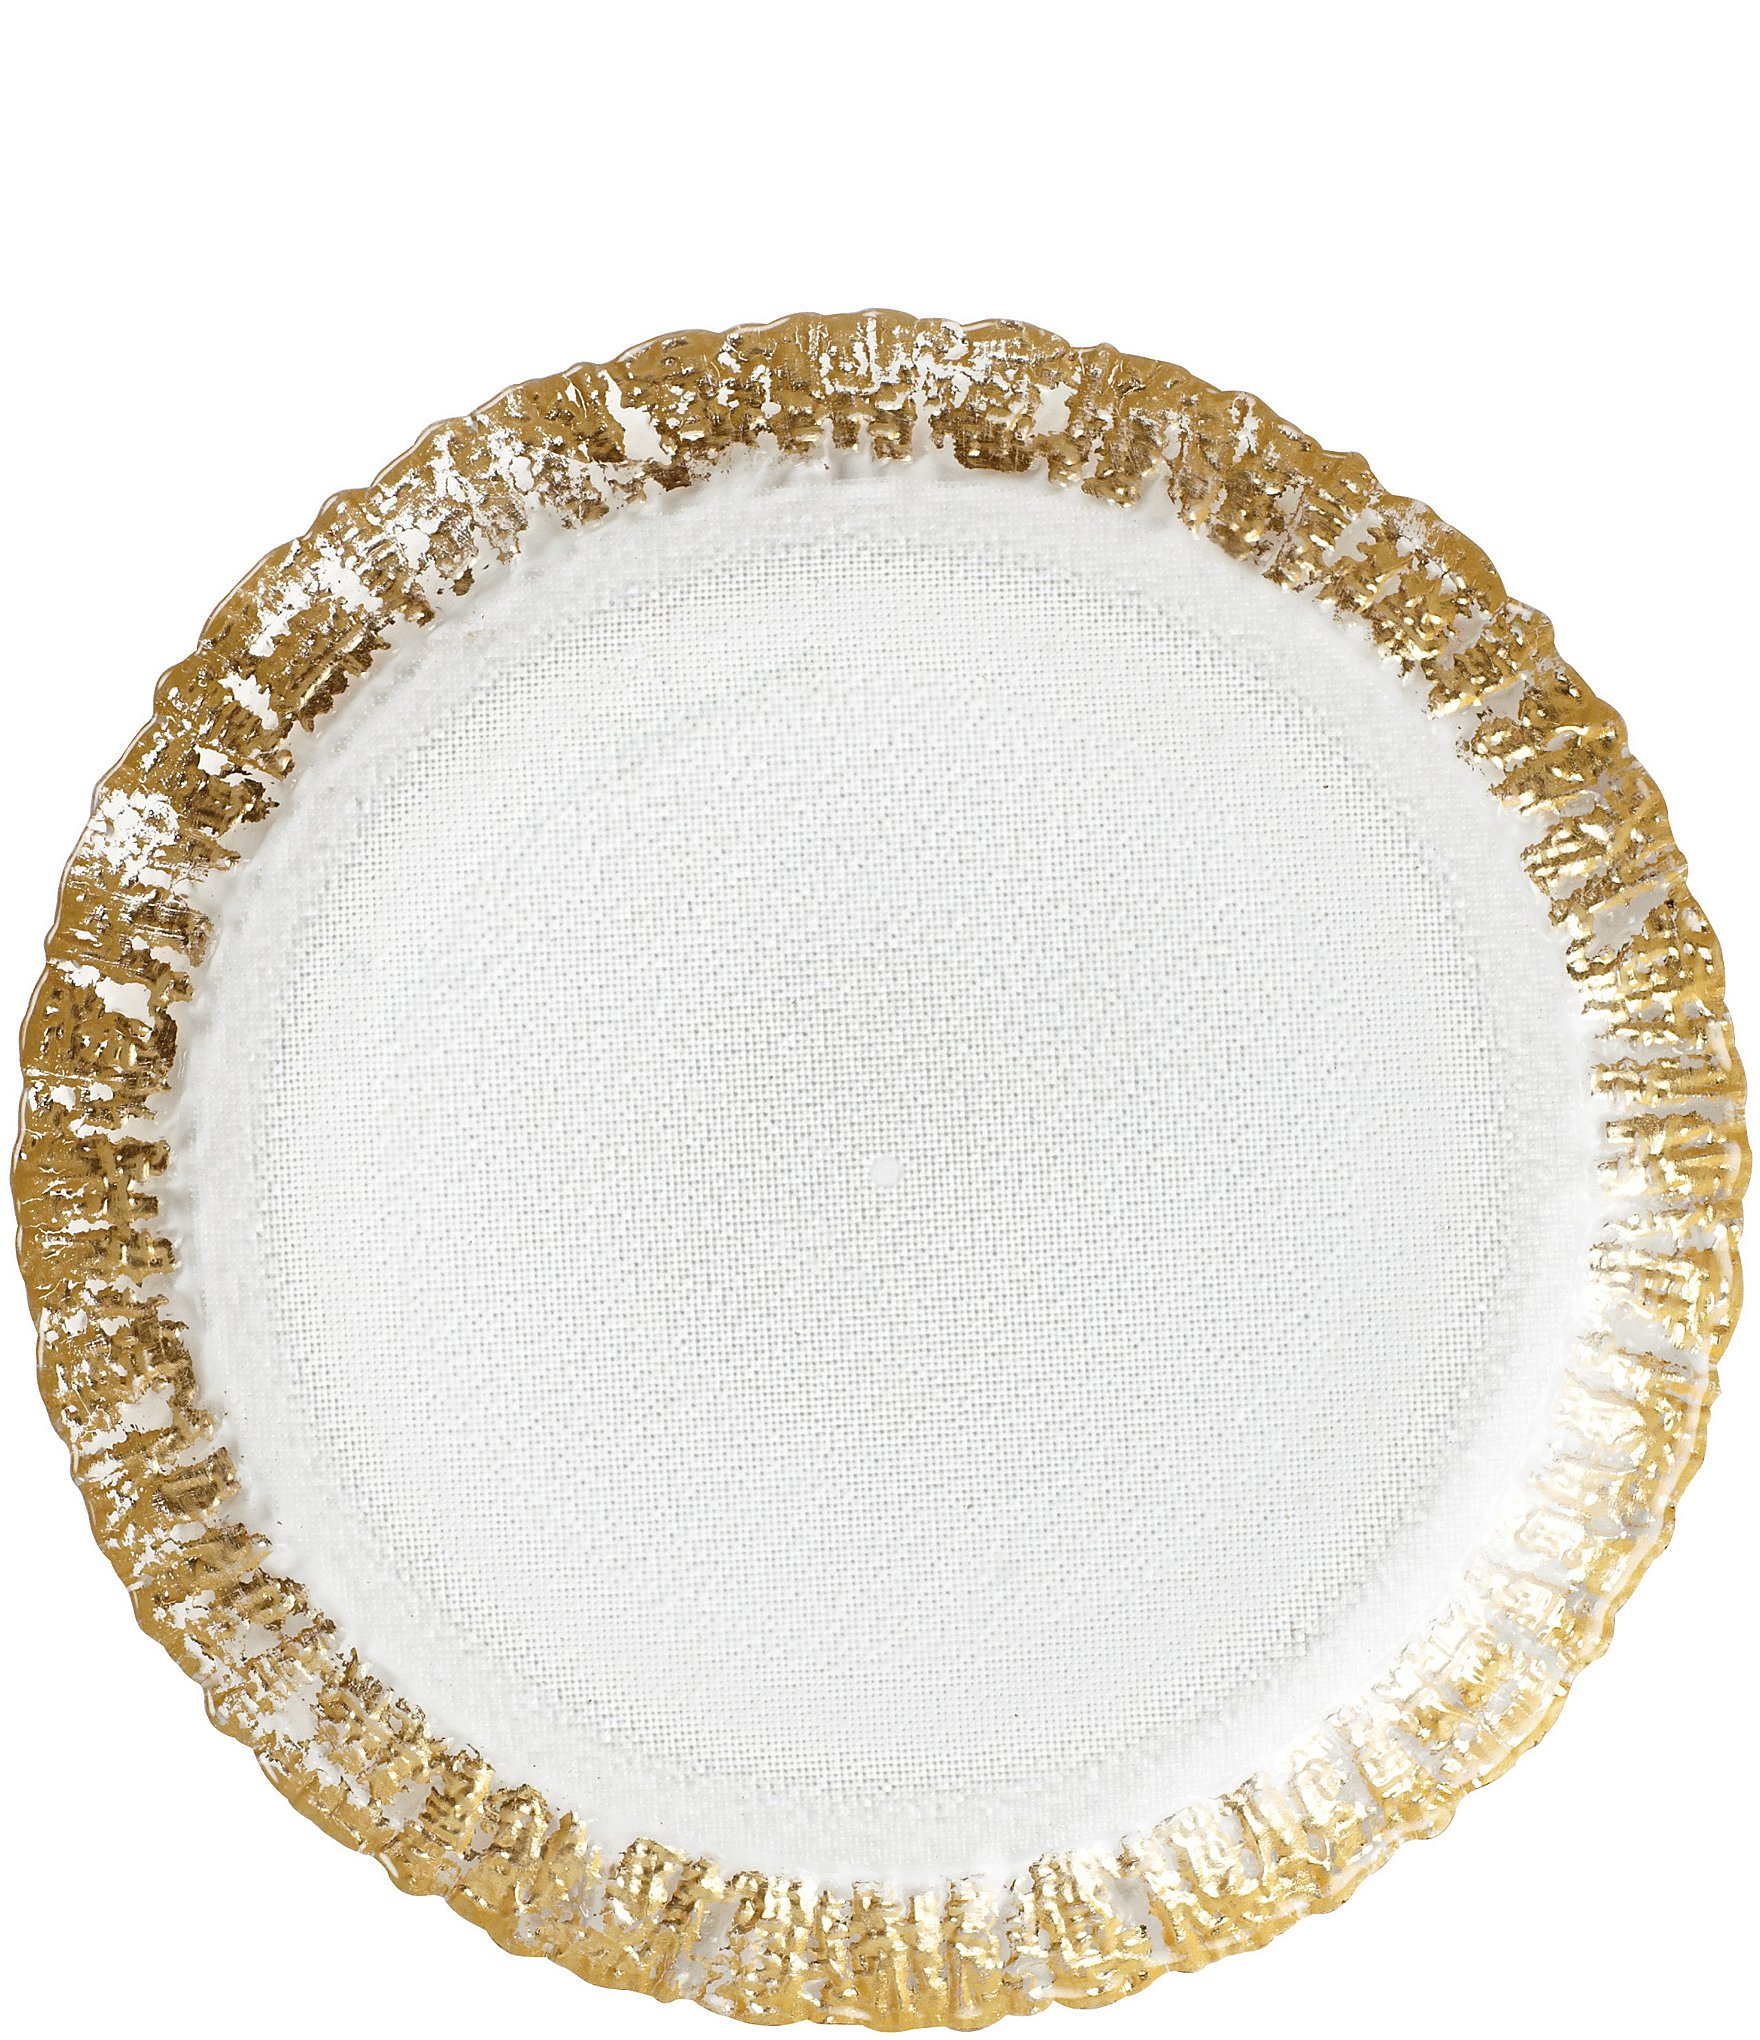 Vietri ruffle glass gold canape plate 6 5 in